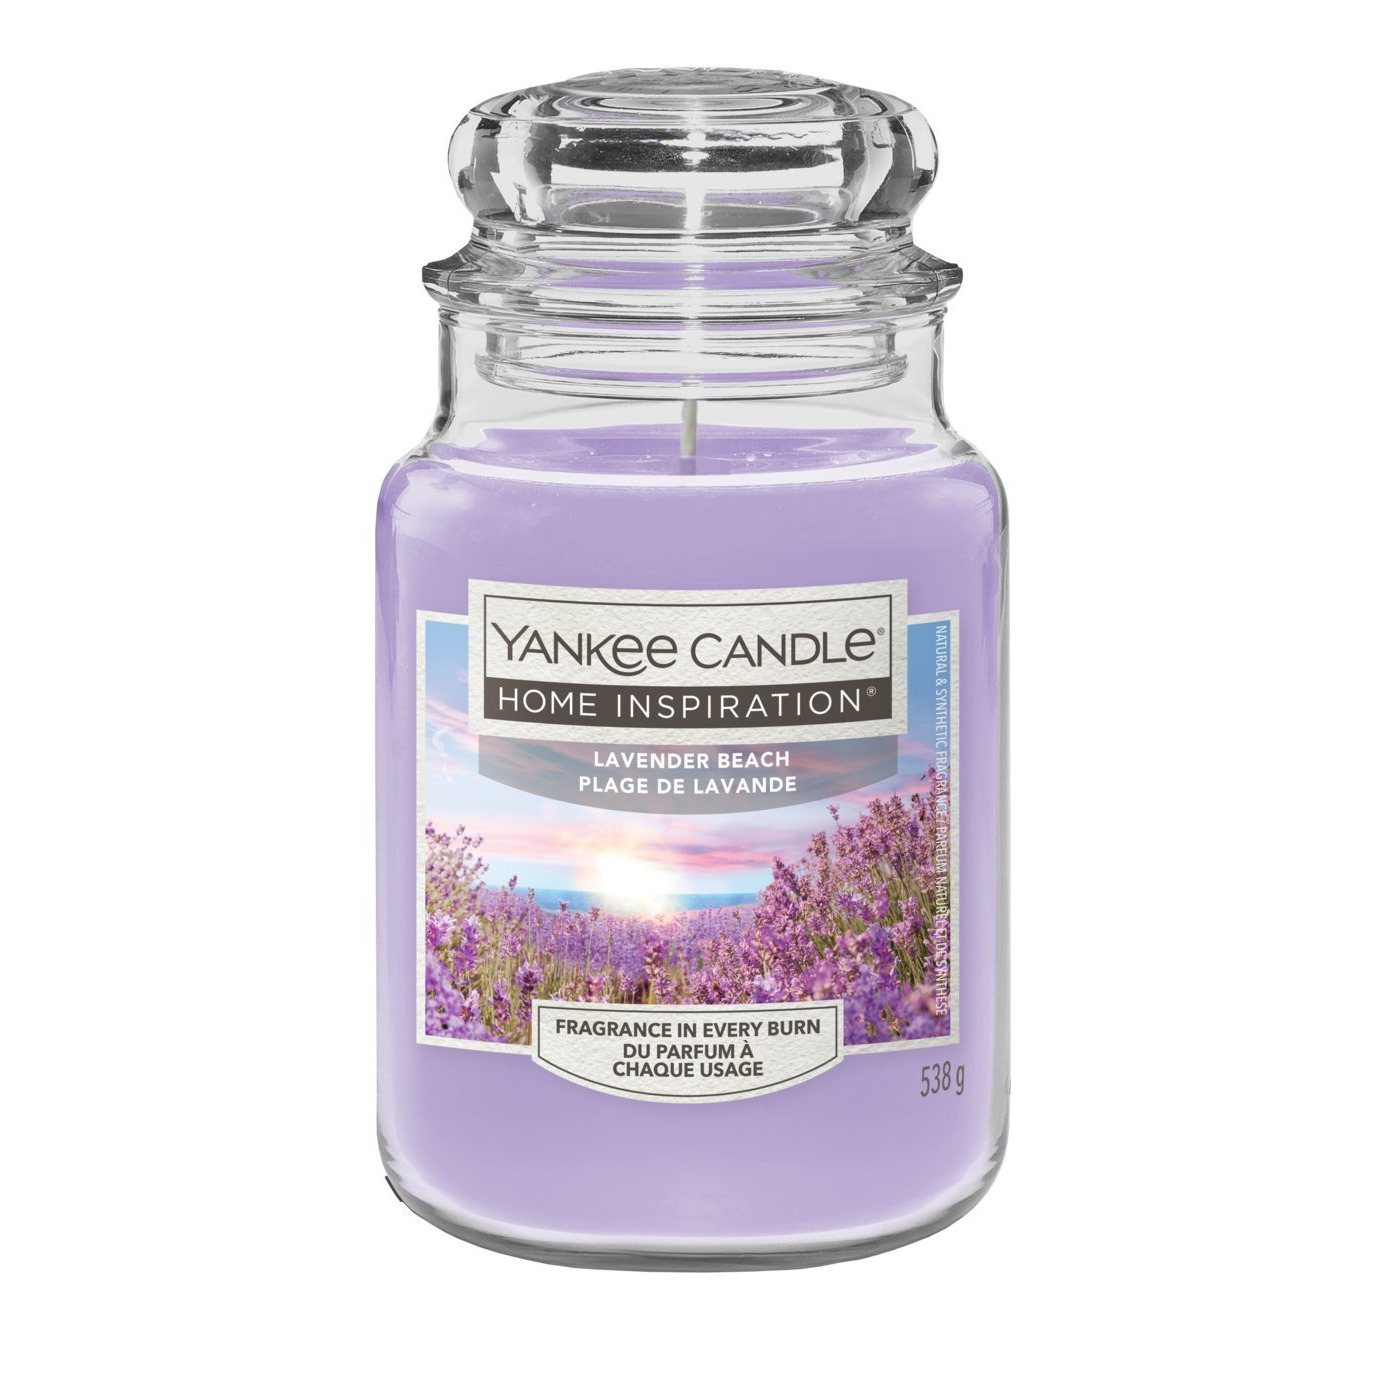 Yankee Home Inspiration Large Jar Candle - Lavender Beach - image 1